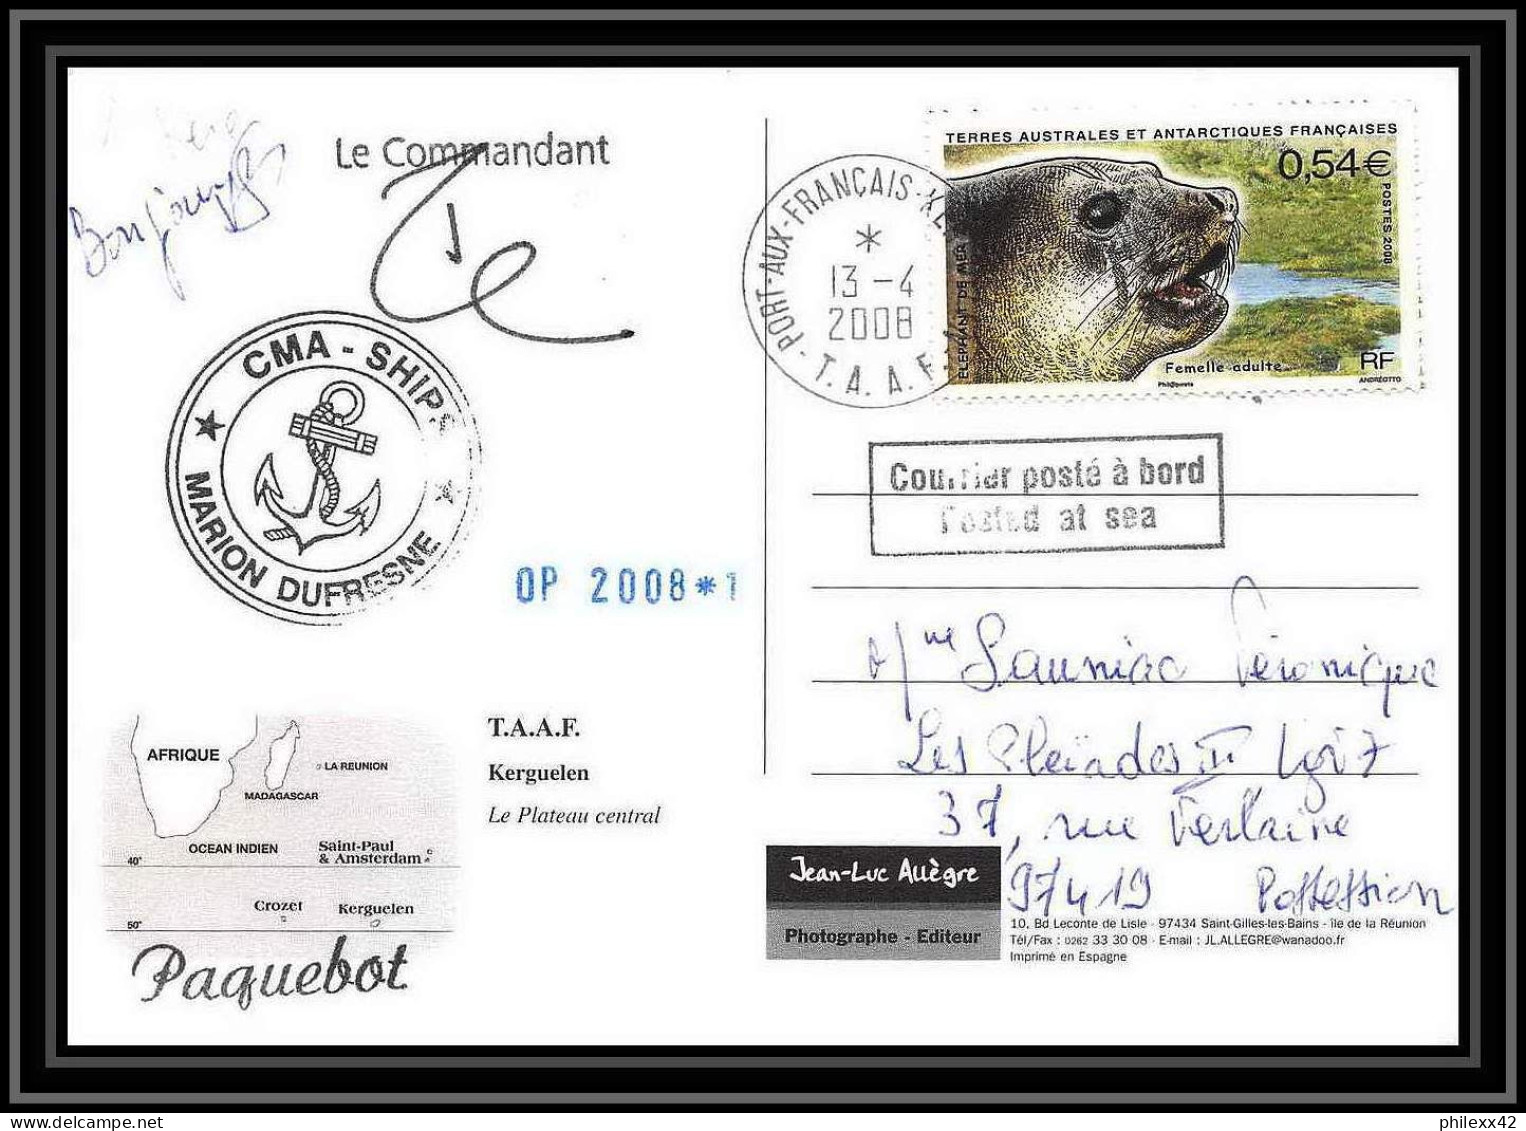 2794 ANTARCTIC Terres Australes (taaf)-carte Postale Dufresne 2 Signé Signed Op 2008/1 Kerguelen N°508 Sea Elephant - Covers & Documents